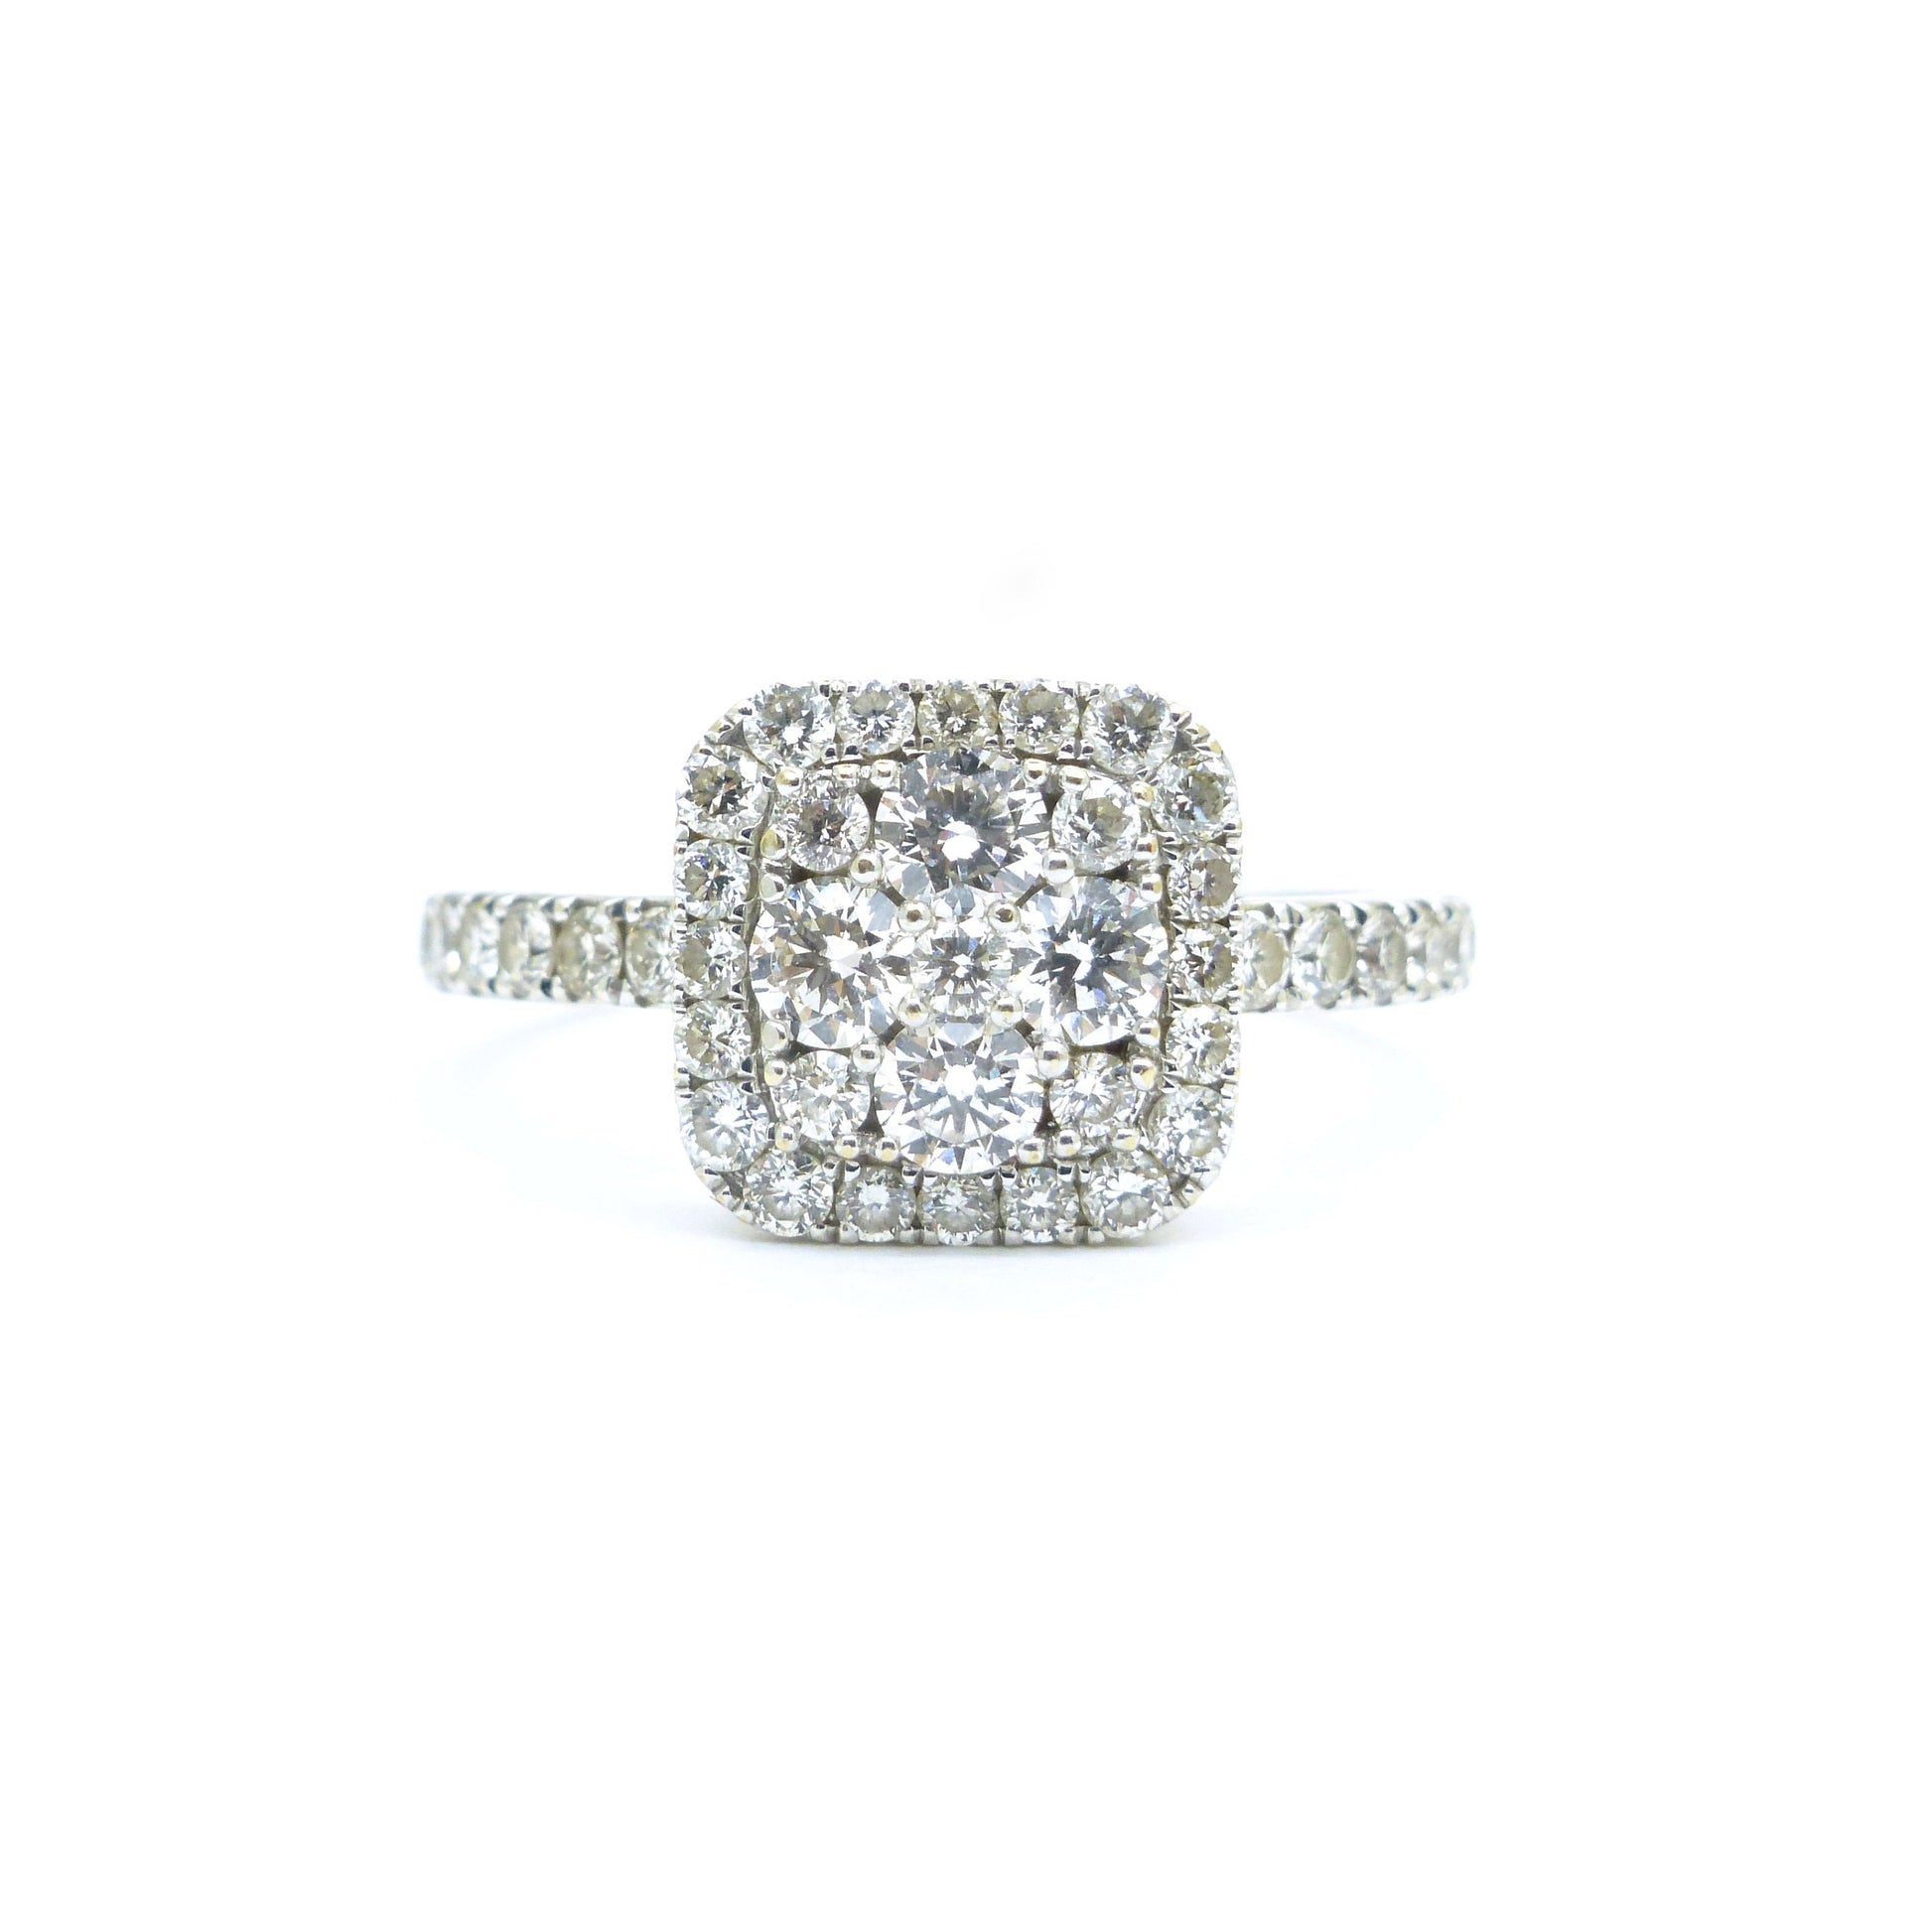 Vintage 18ct white gold diamond cluster engagement ring